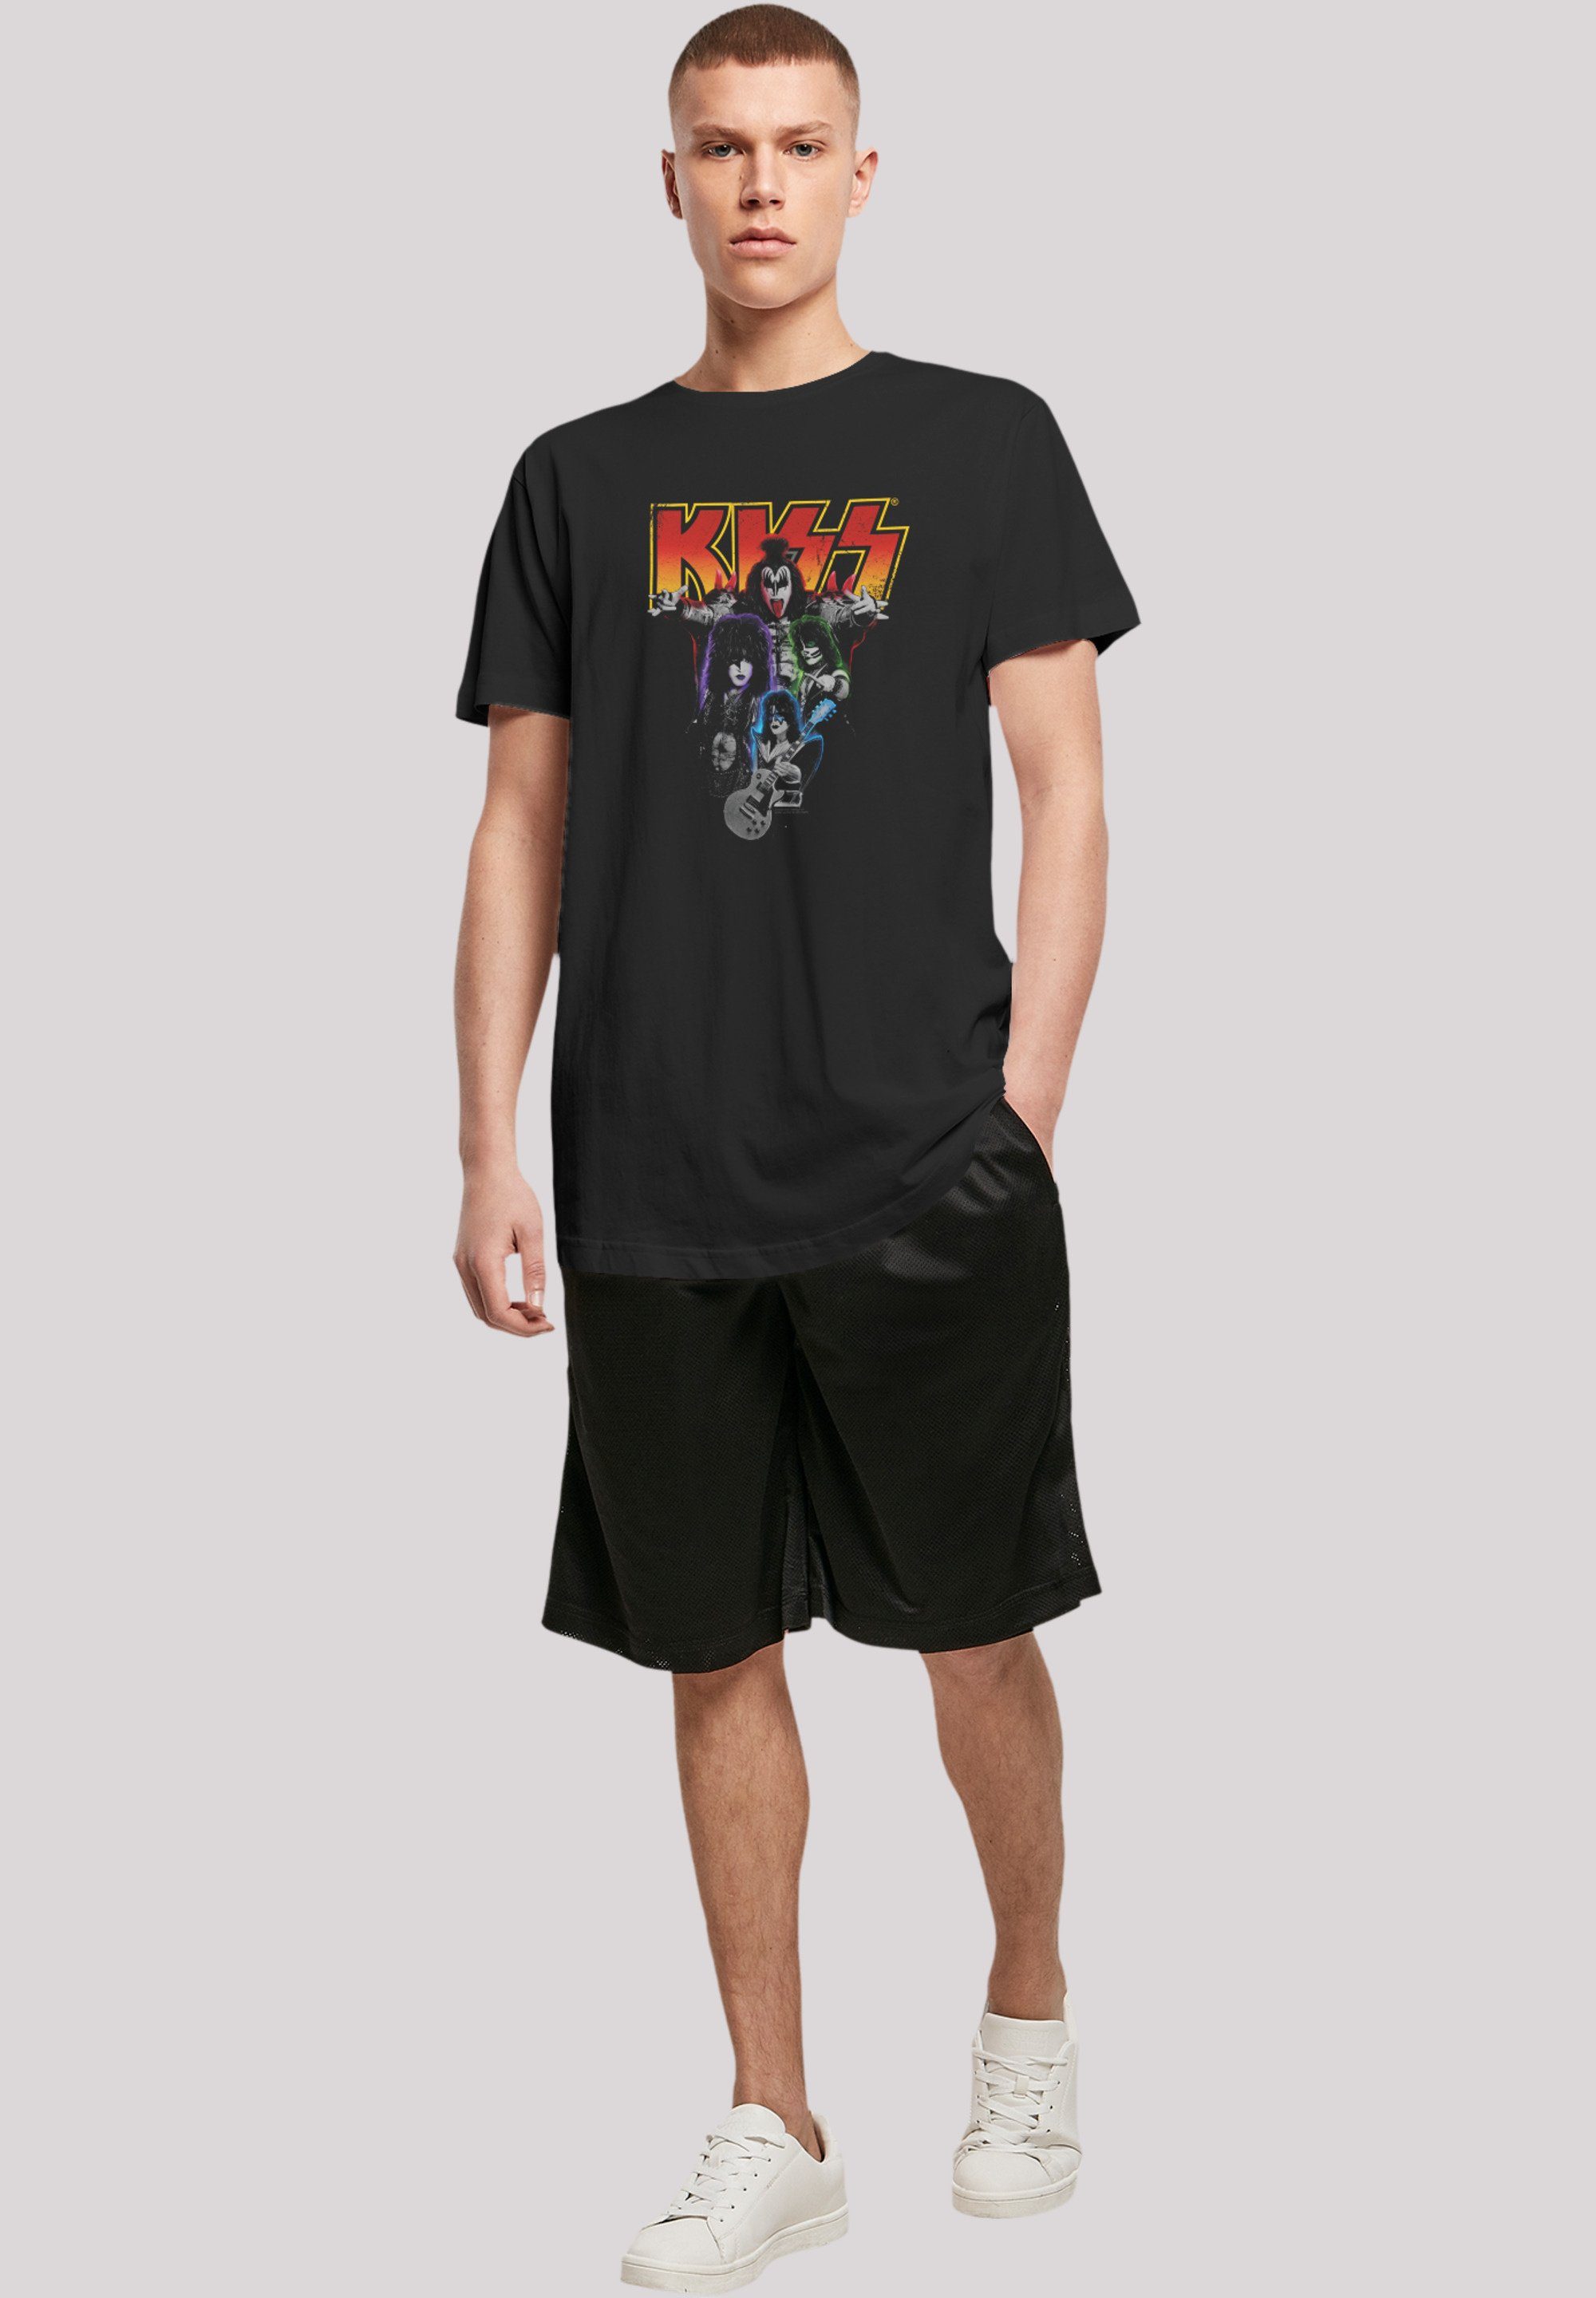 F4NT4STIC T-Shirt Kiss Rock Band Off Rock Premium Qualität, Neon By Musik